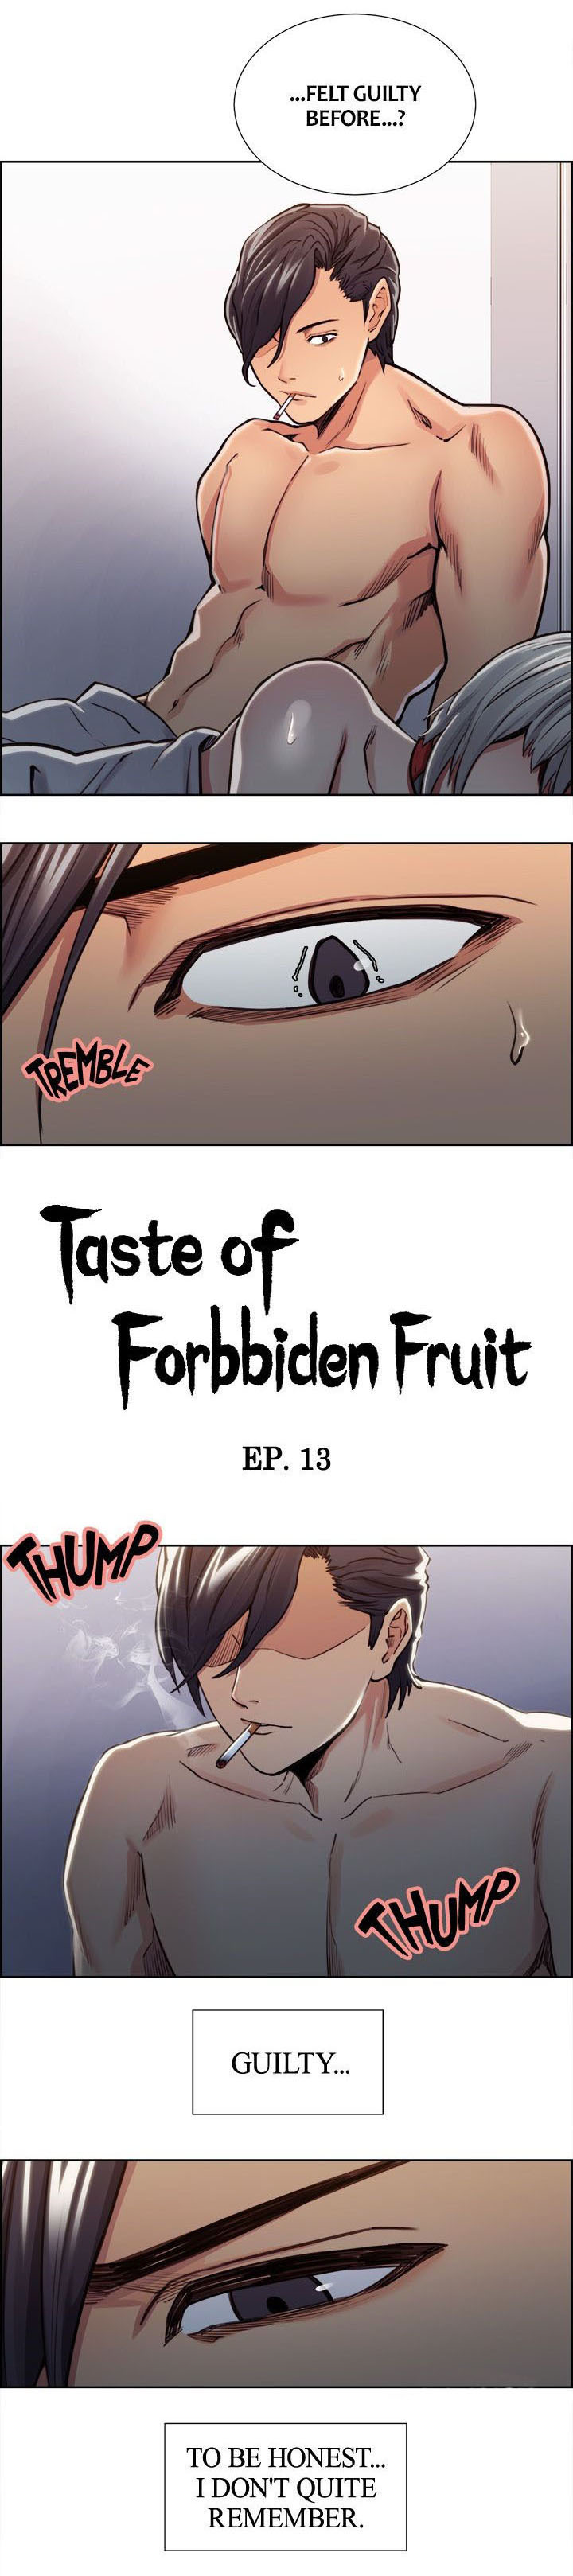 [Serious] Taste of Forbbiden Fruit Ch.20/24